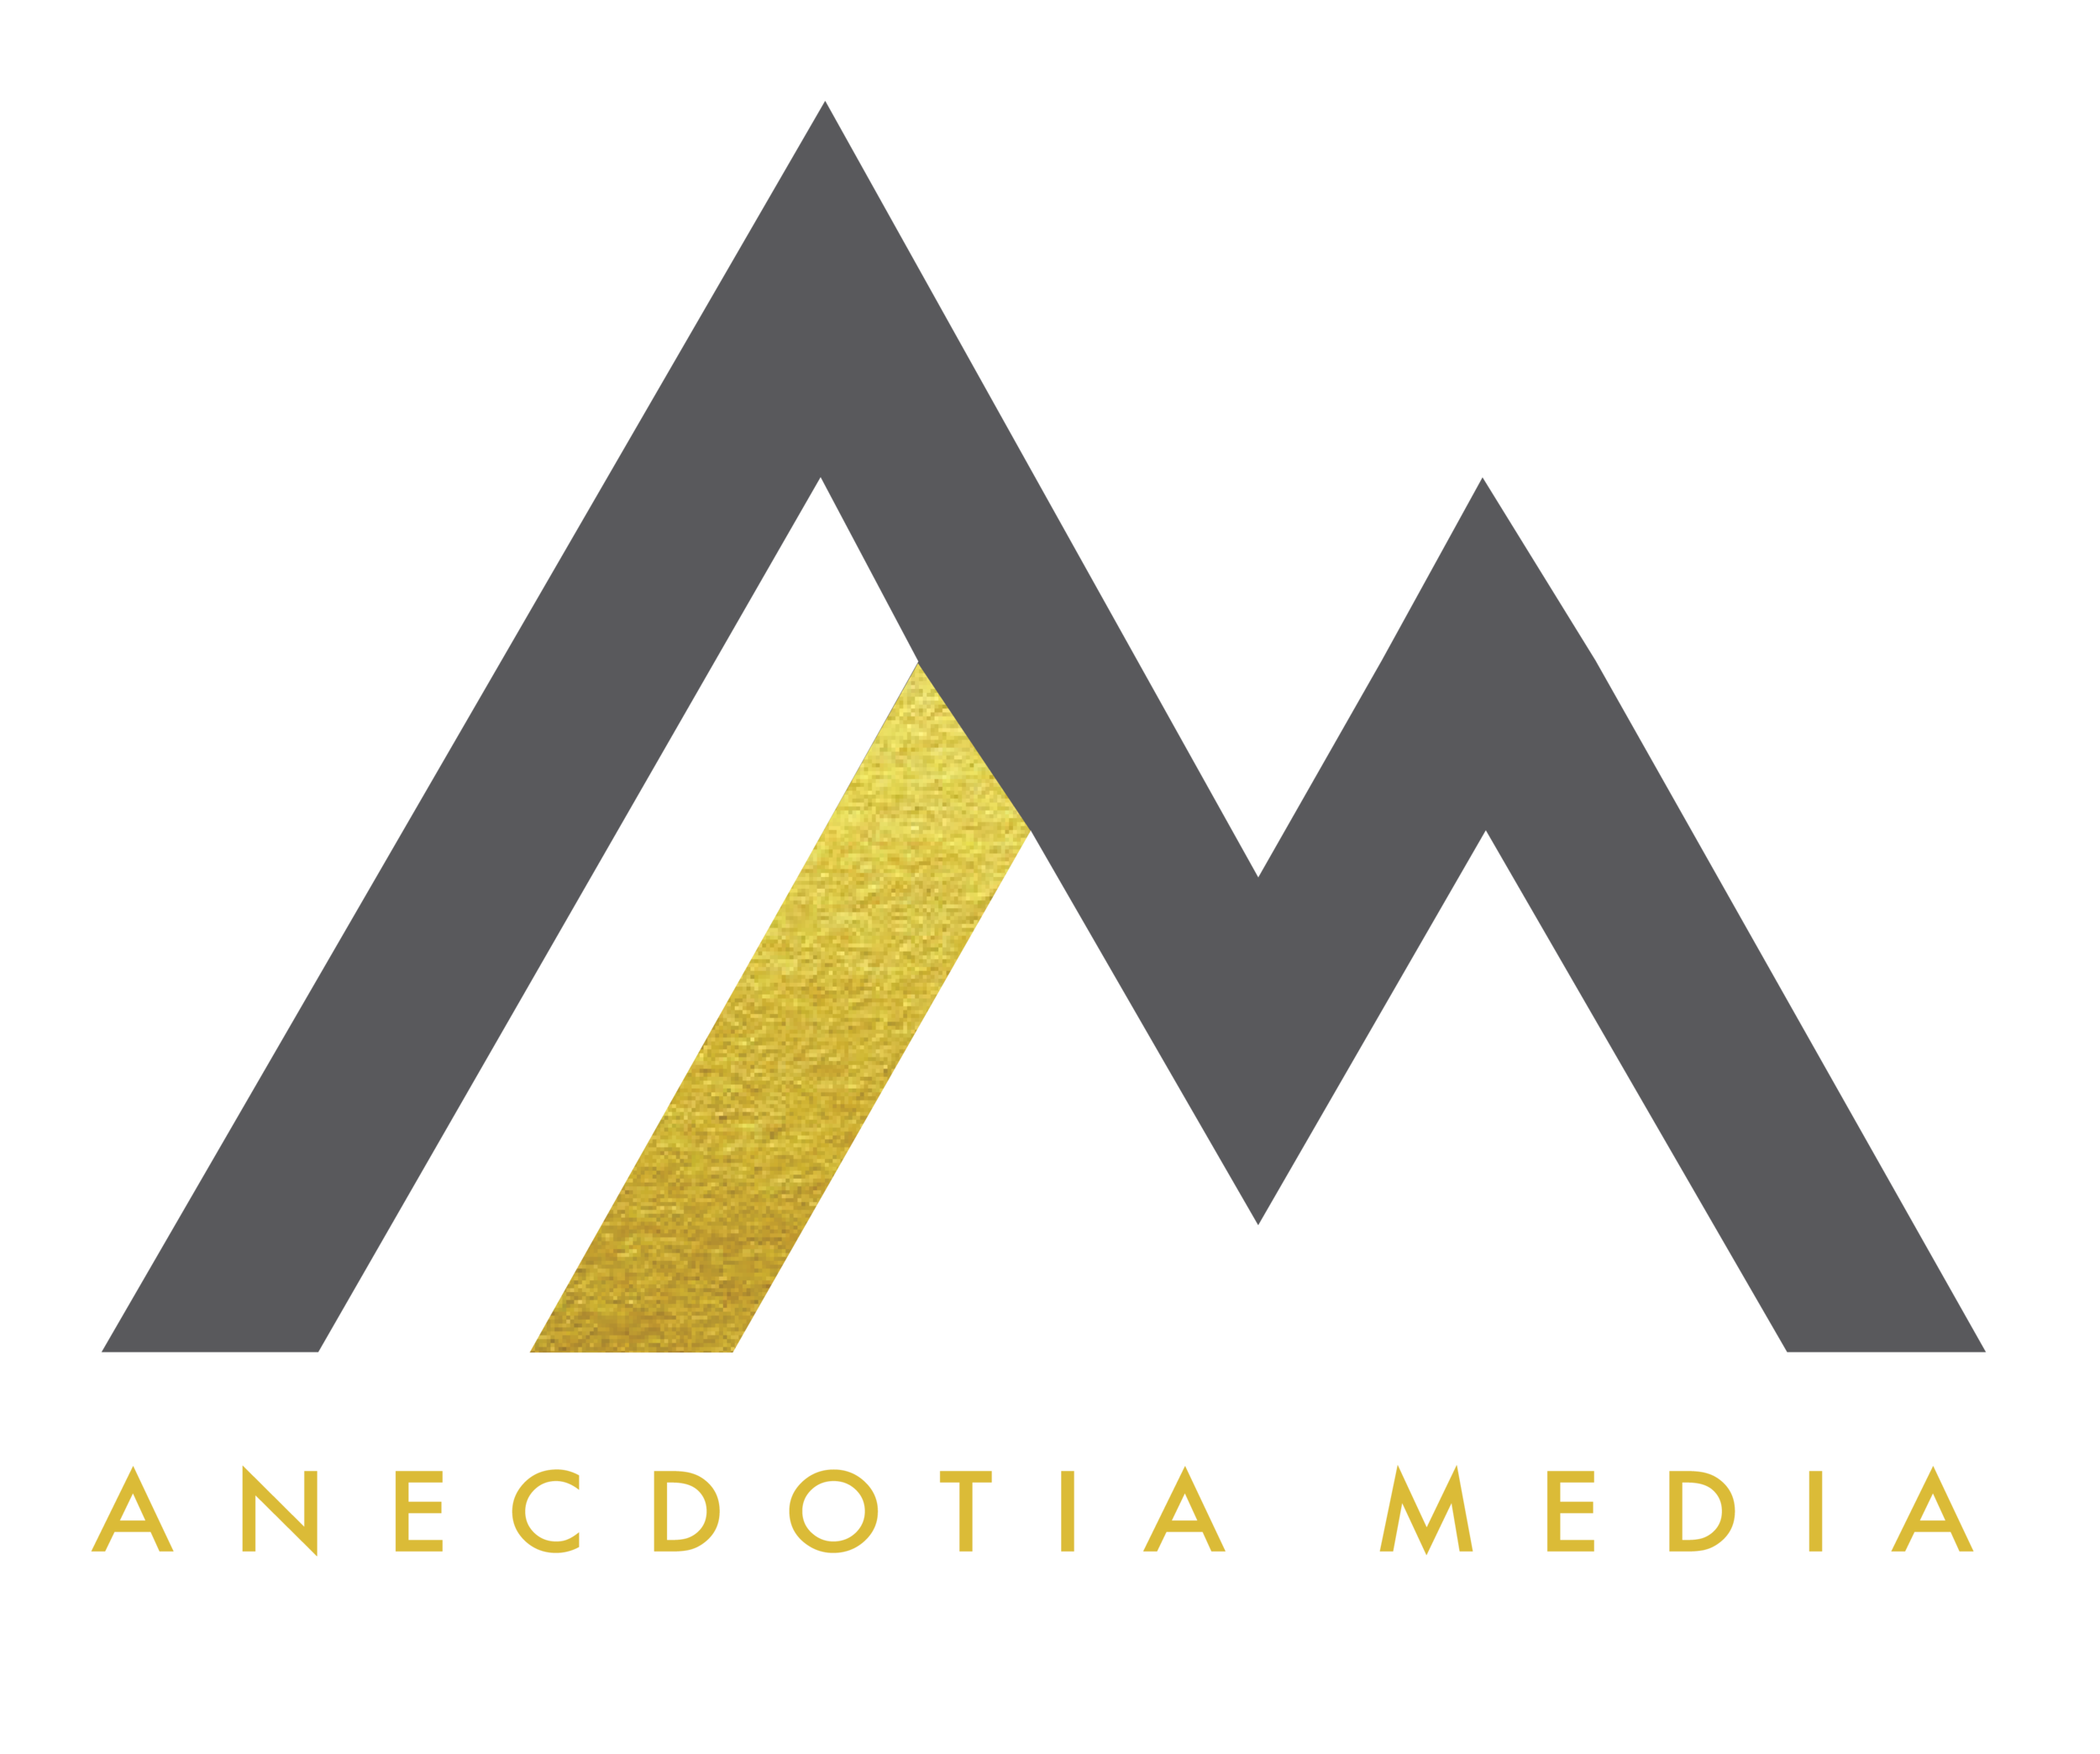 Anecdotia Media